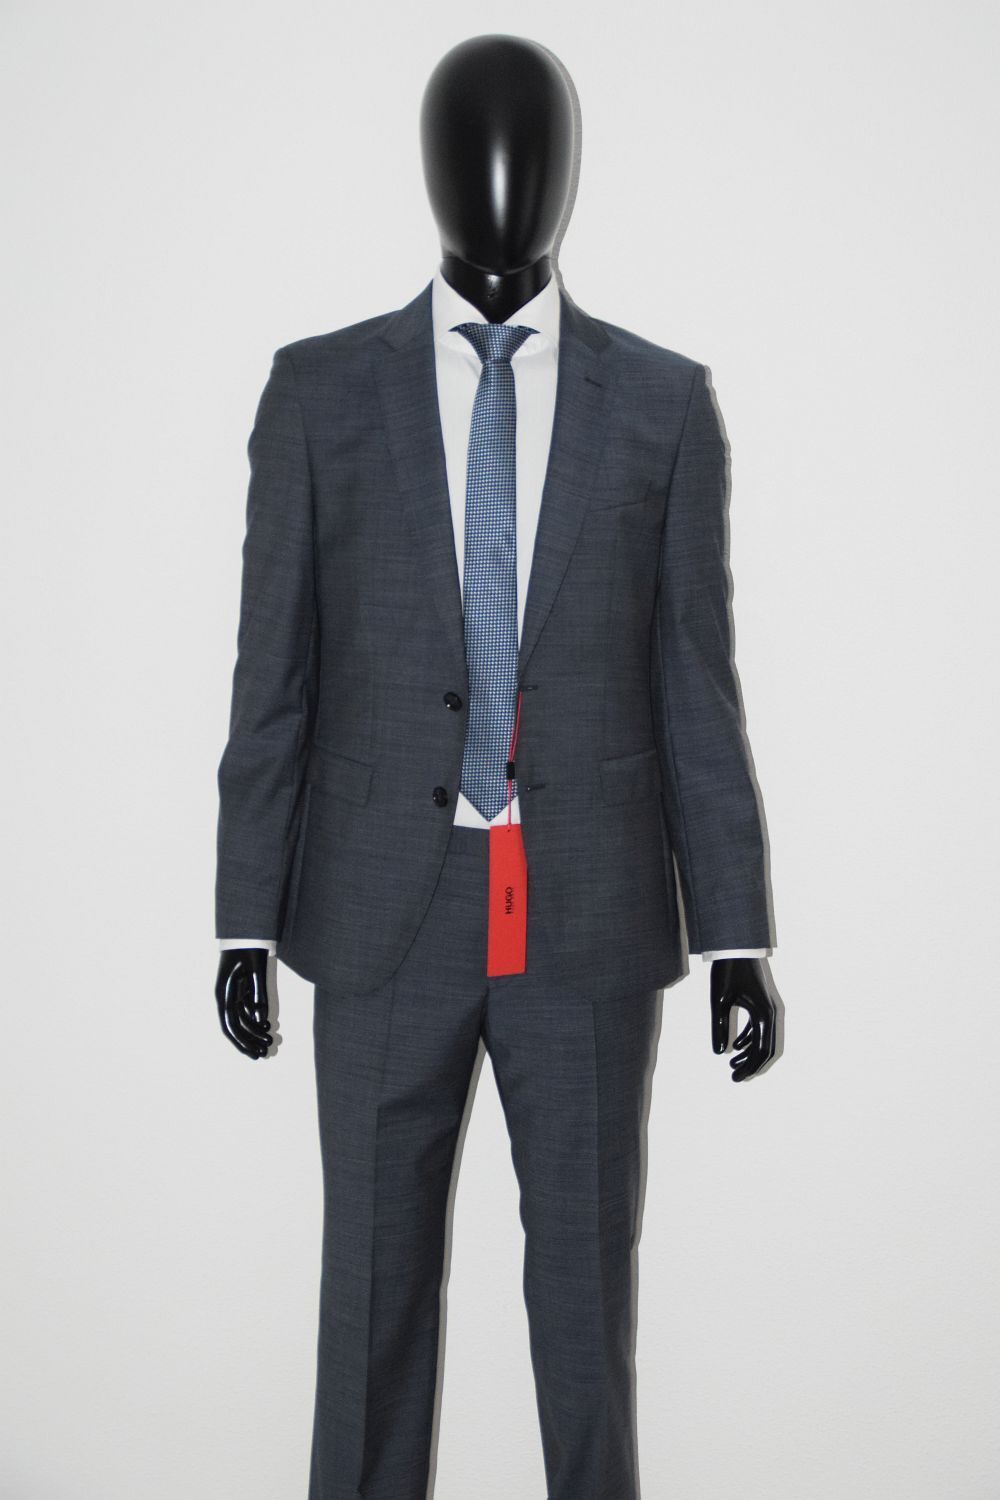 Pre-owned Hugo Boss Suit, Model C-jefferd/c-stedson, Size 48 / Us 38r, Dark Blue